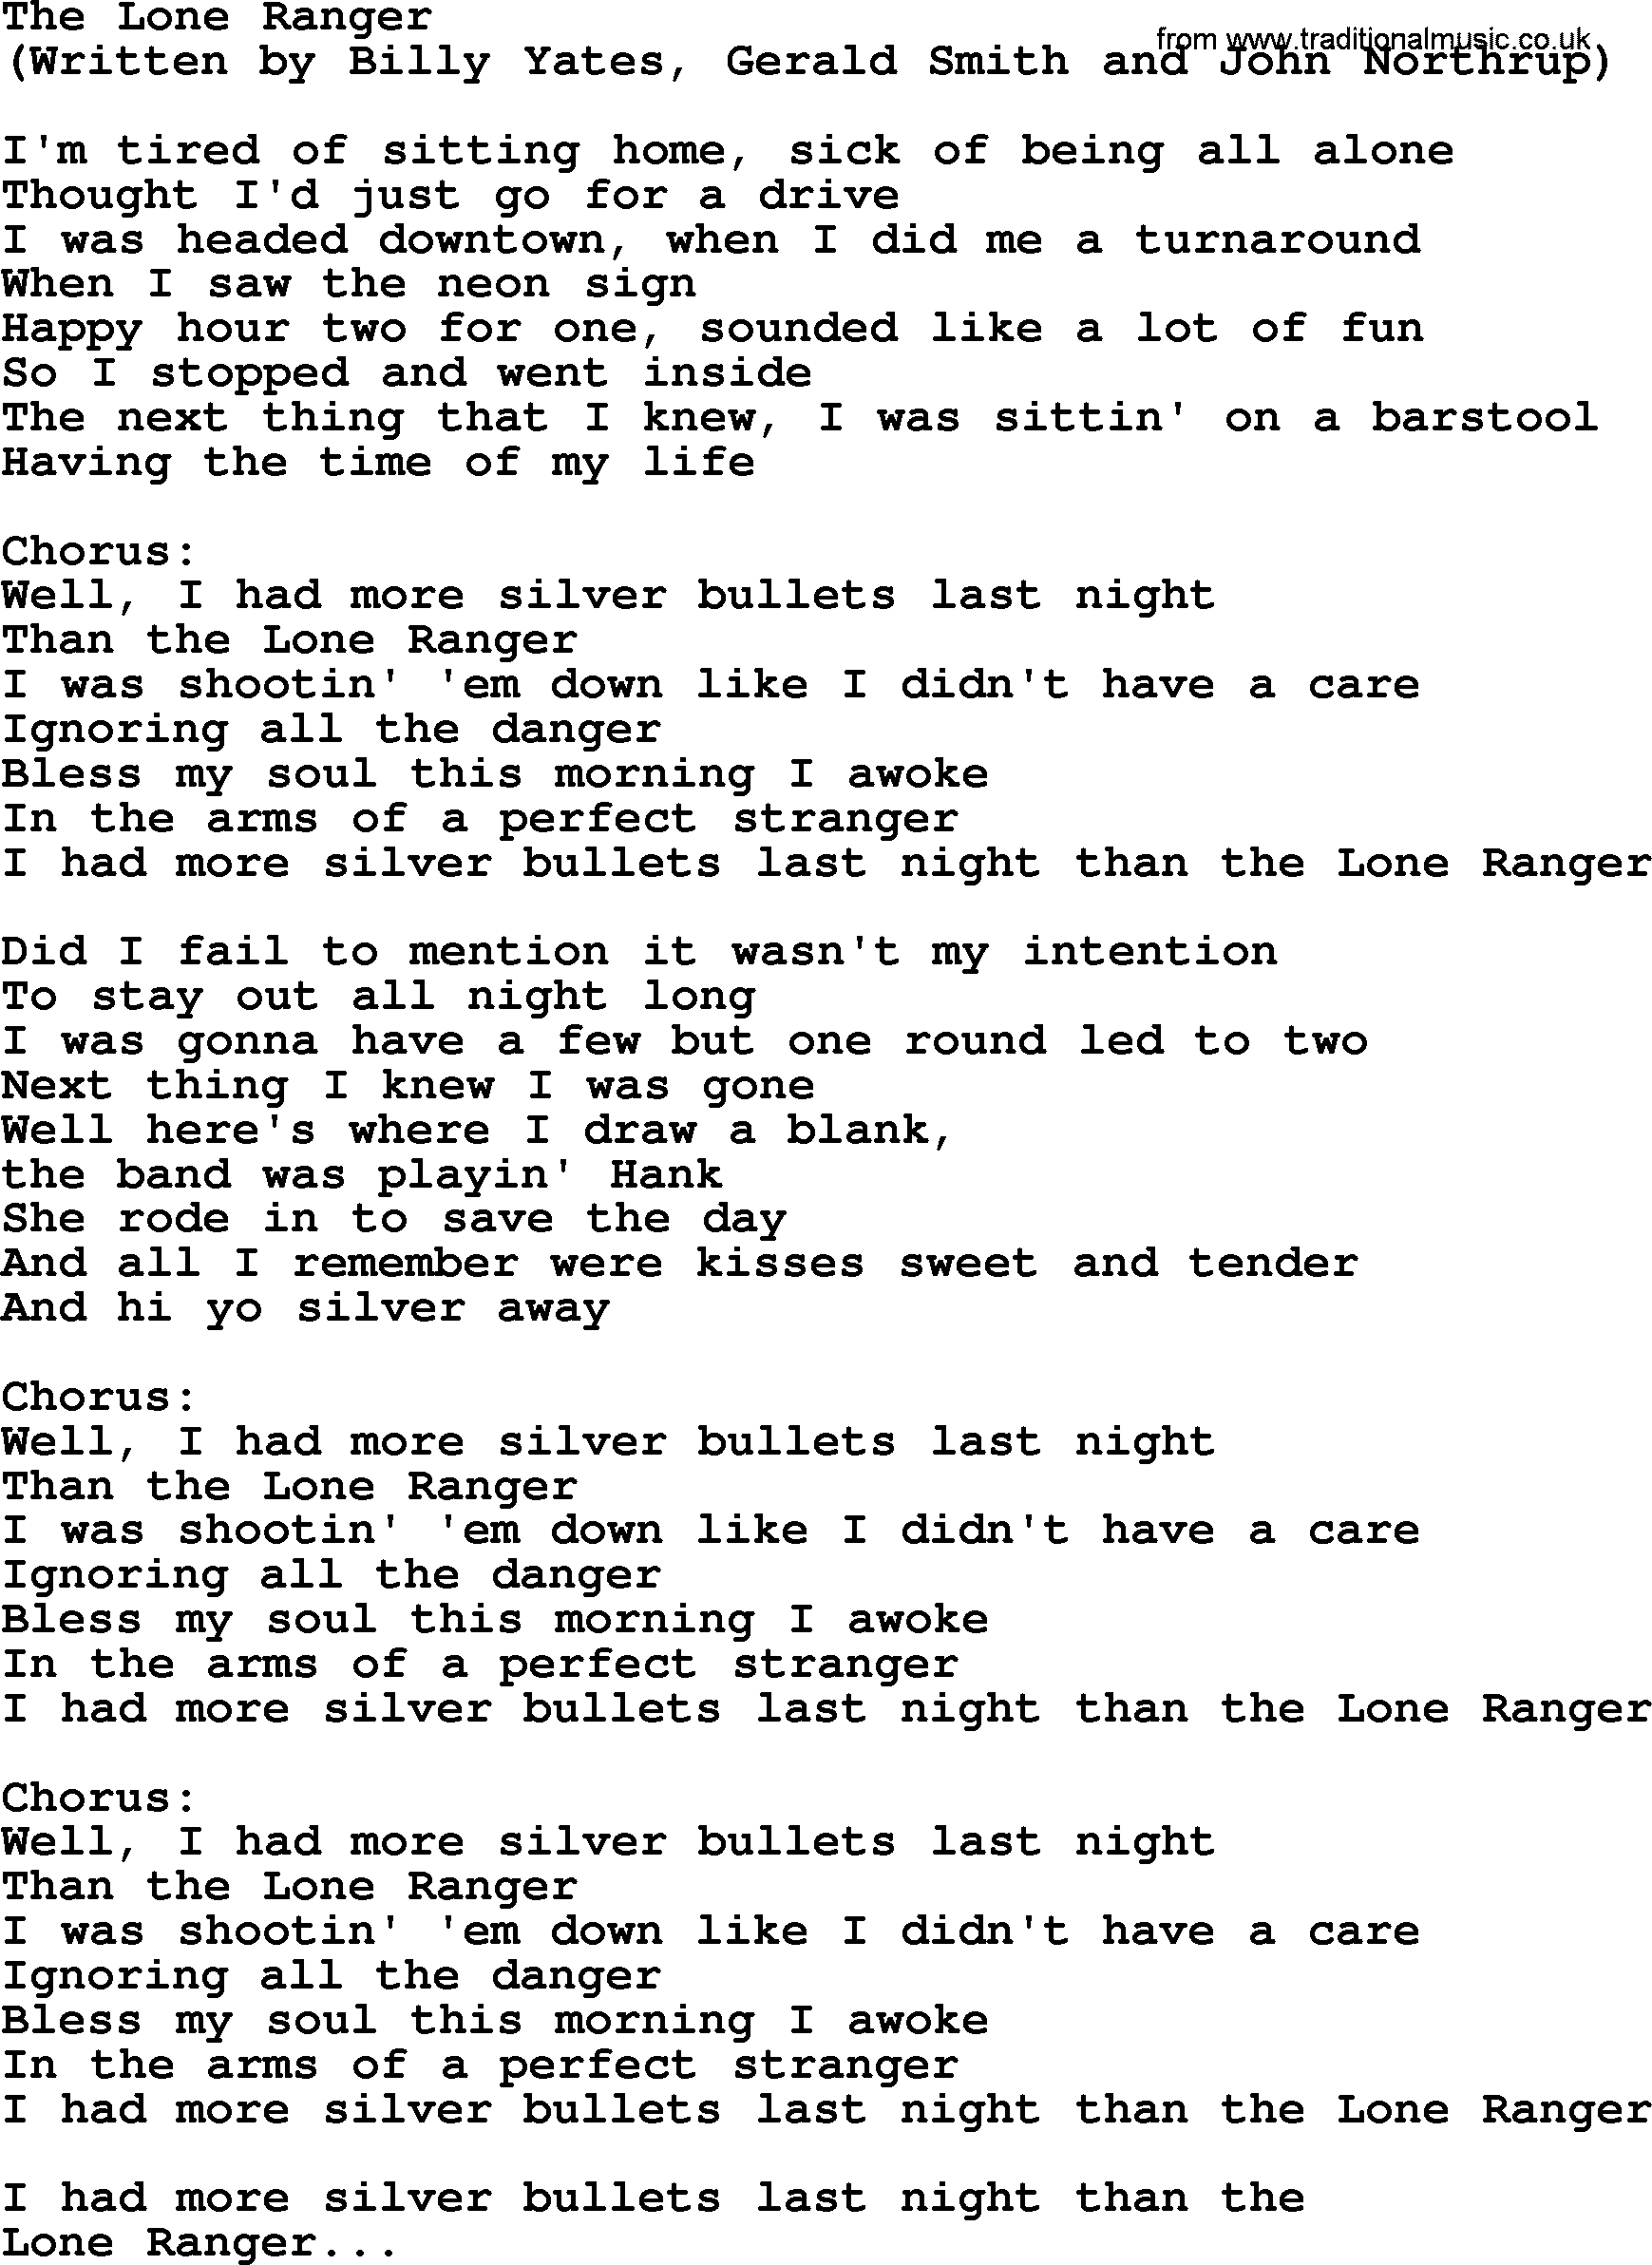 George Jones song: The Lone Ranger, lyrics